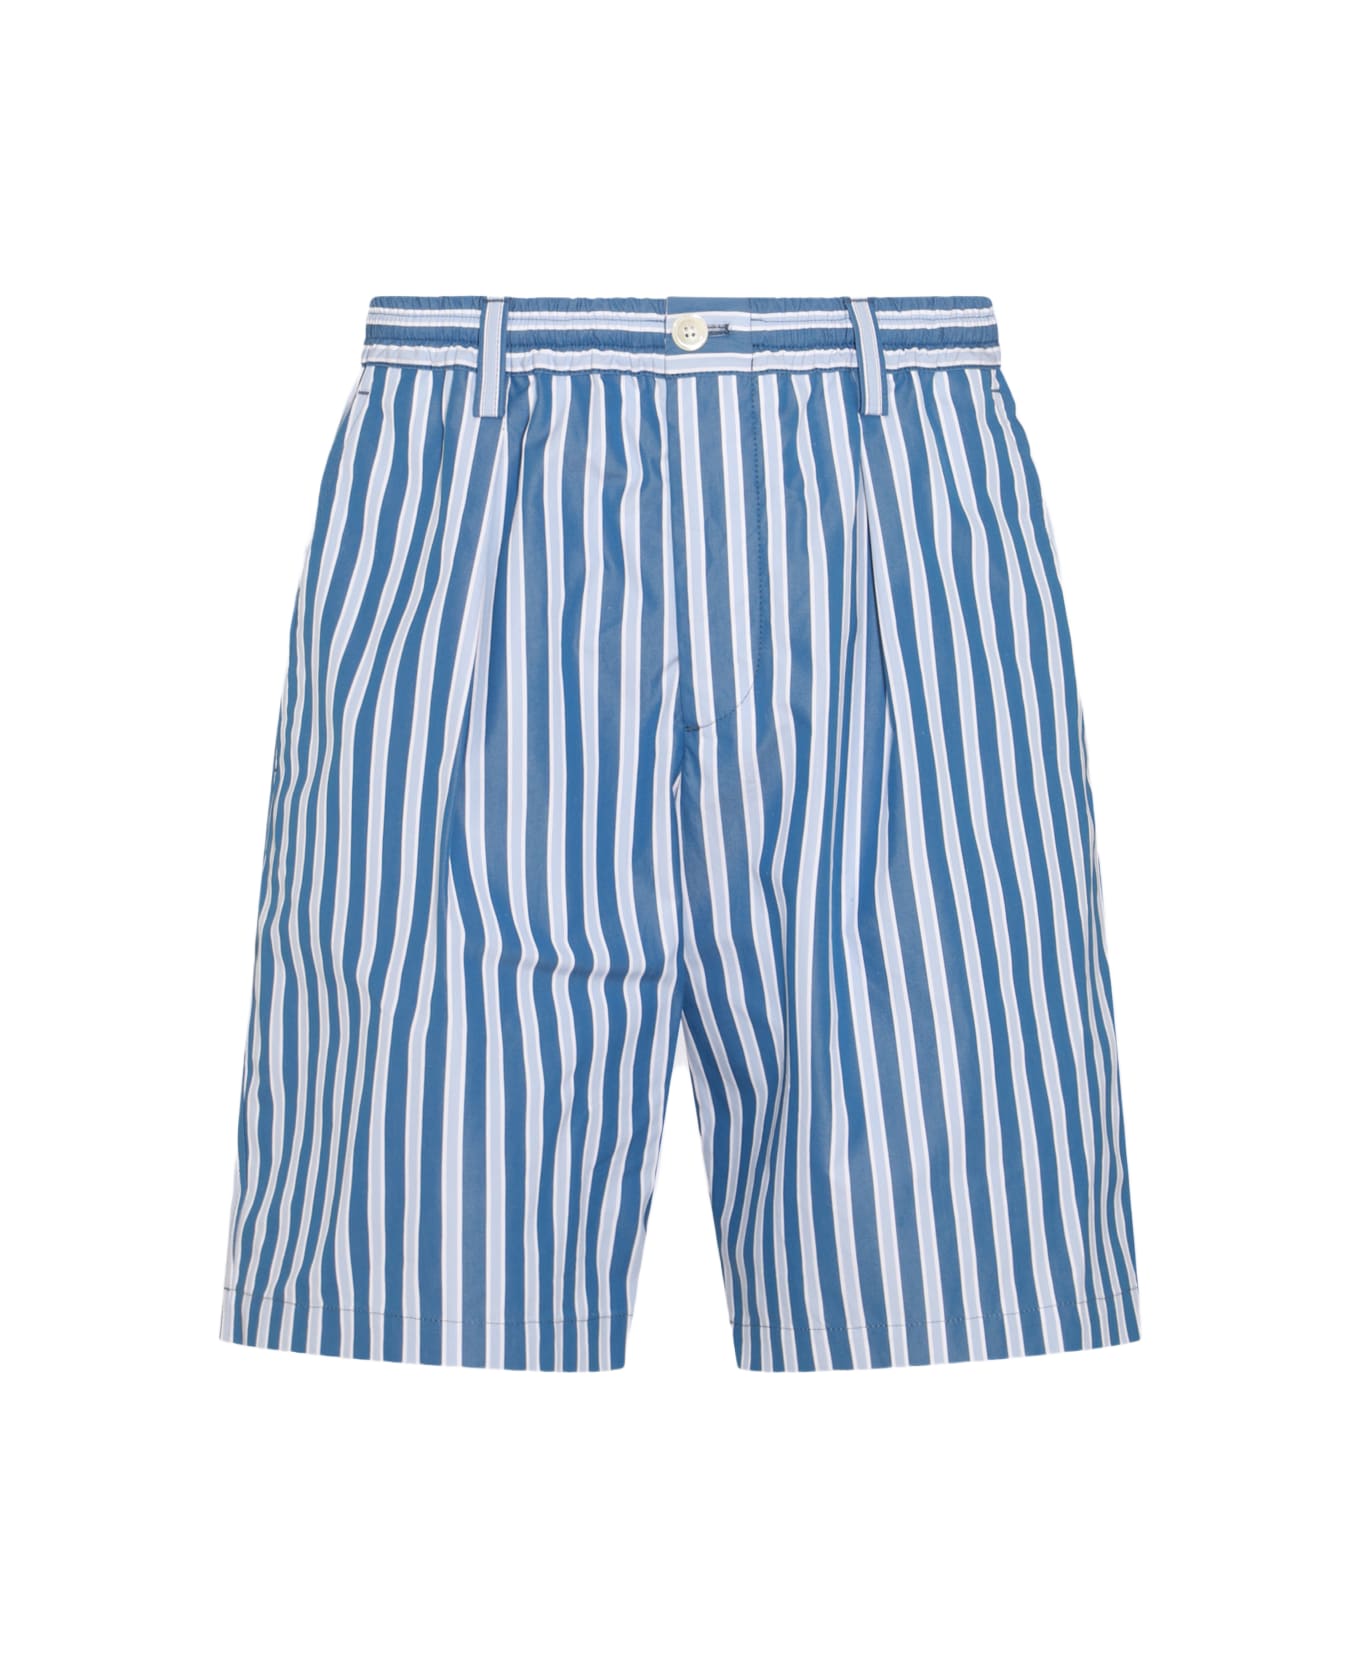 Marni White And Light Blue Cotton Shorts - OPAL